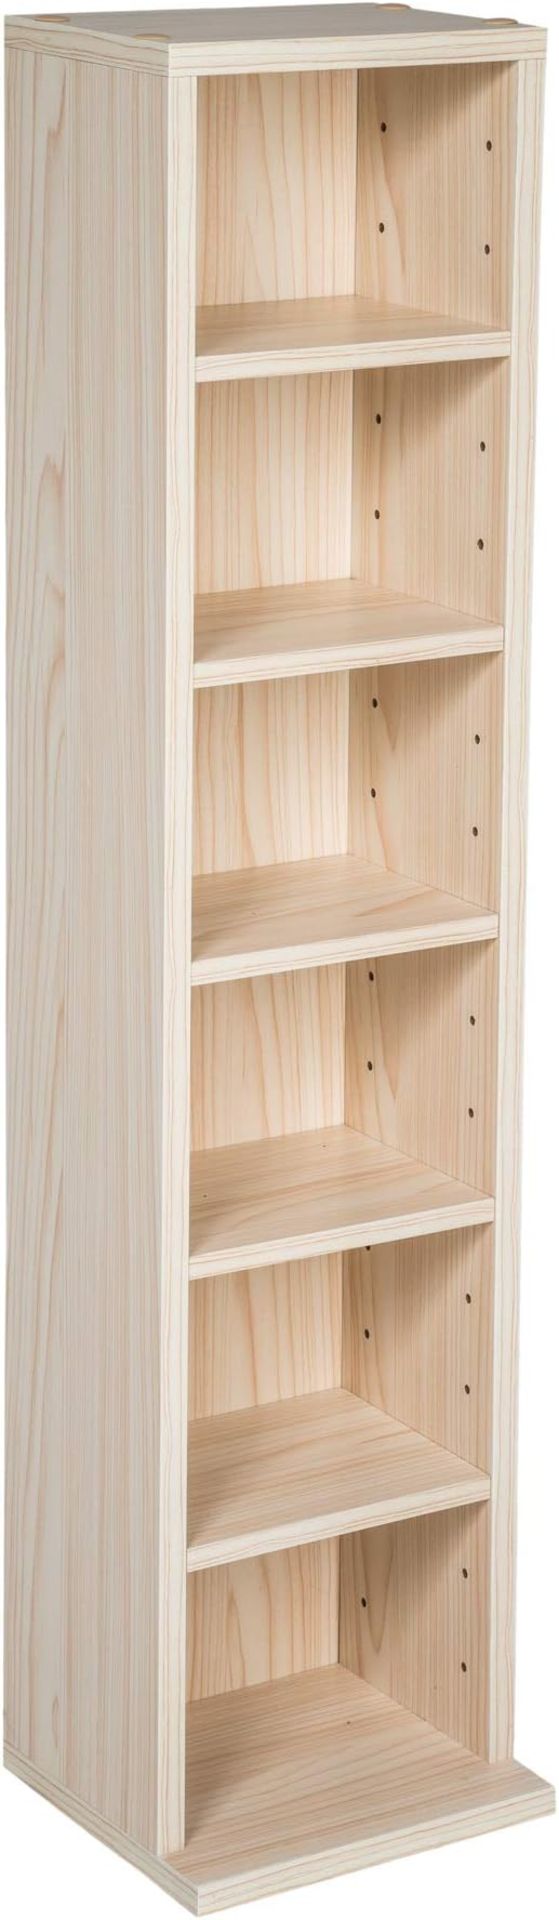 TecTake CD Bookcase Storage - Shelf Cabinet Adjustable Tower Rack - Wooden Case Book, Bluray, DVD,